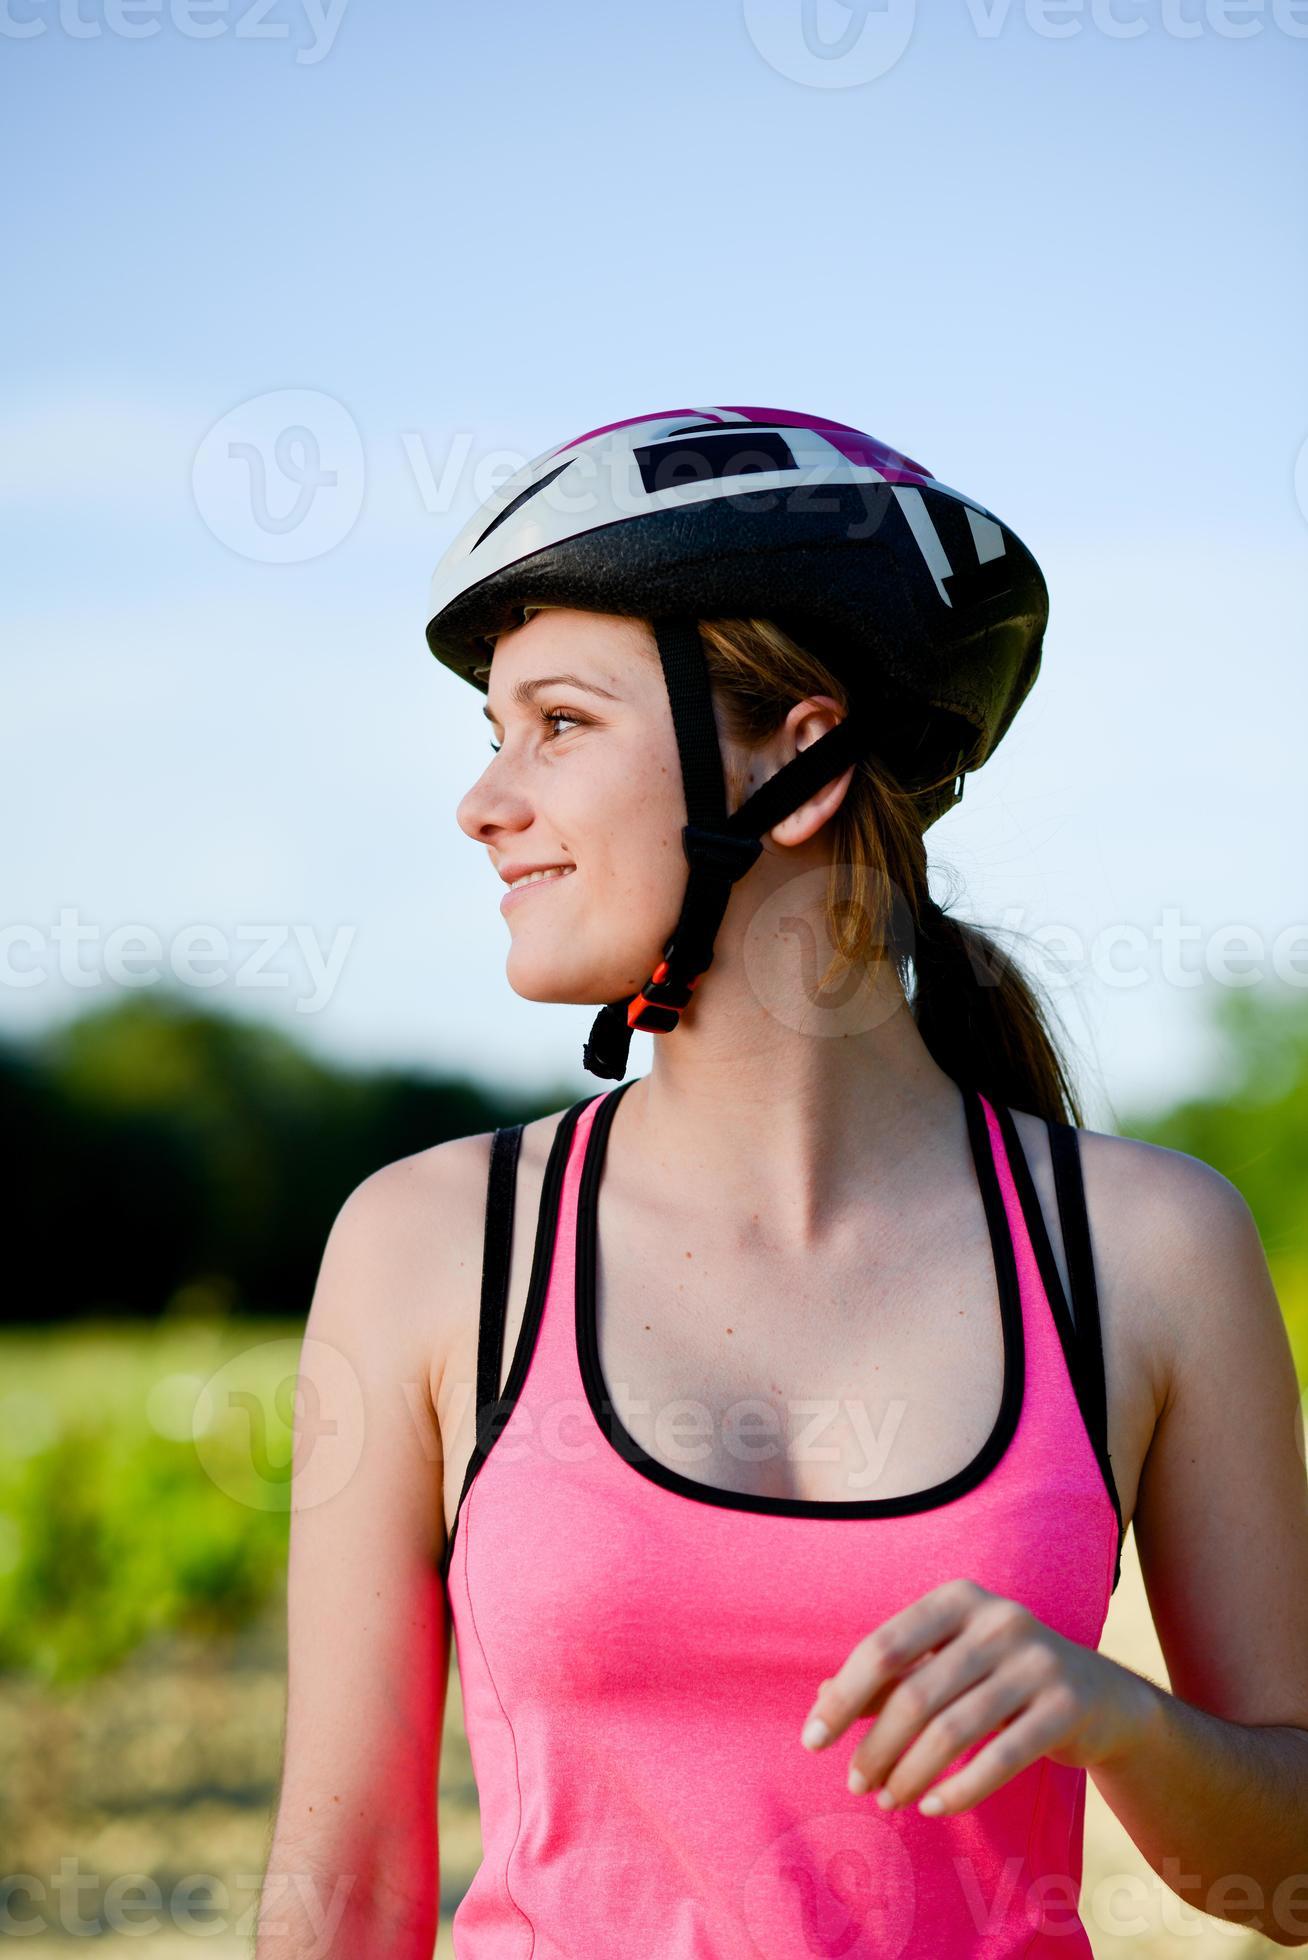 frisk glad ung kvinna ridning mountainbike utomhus på landsbygden foto